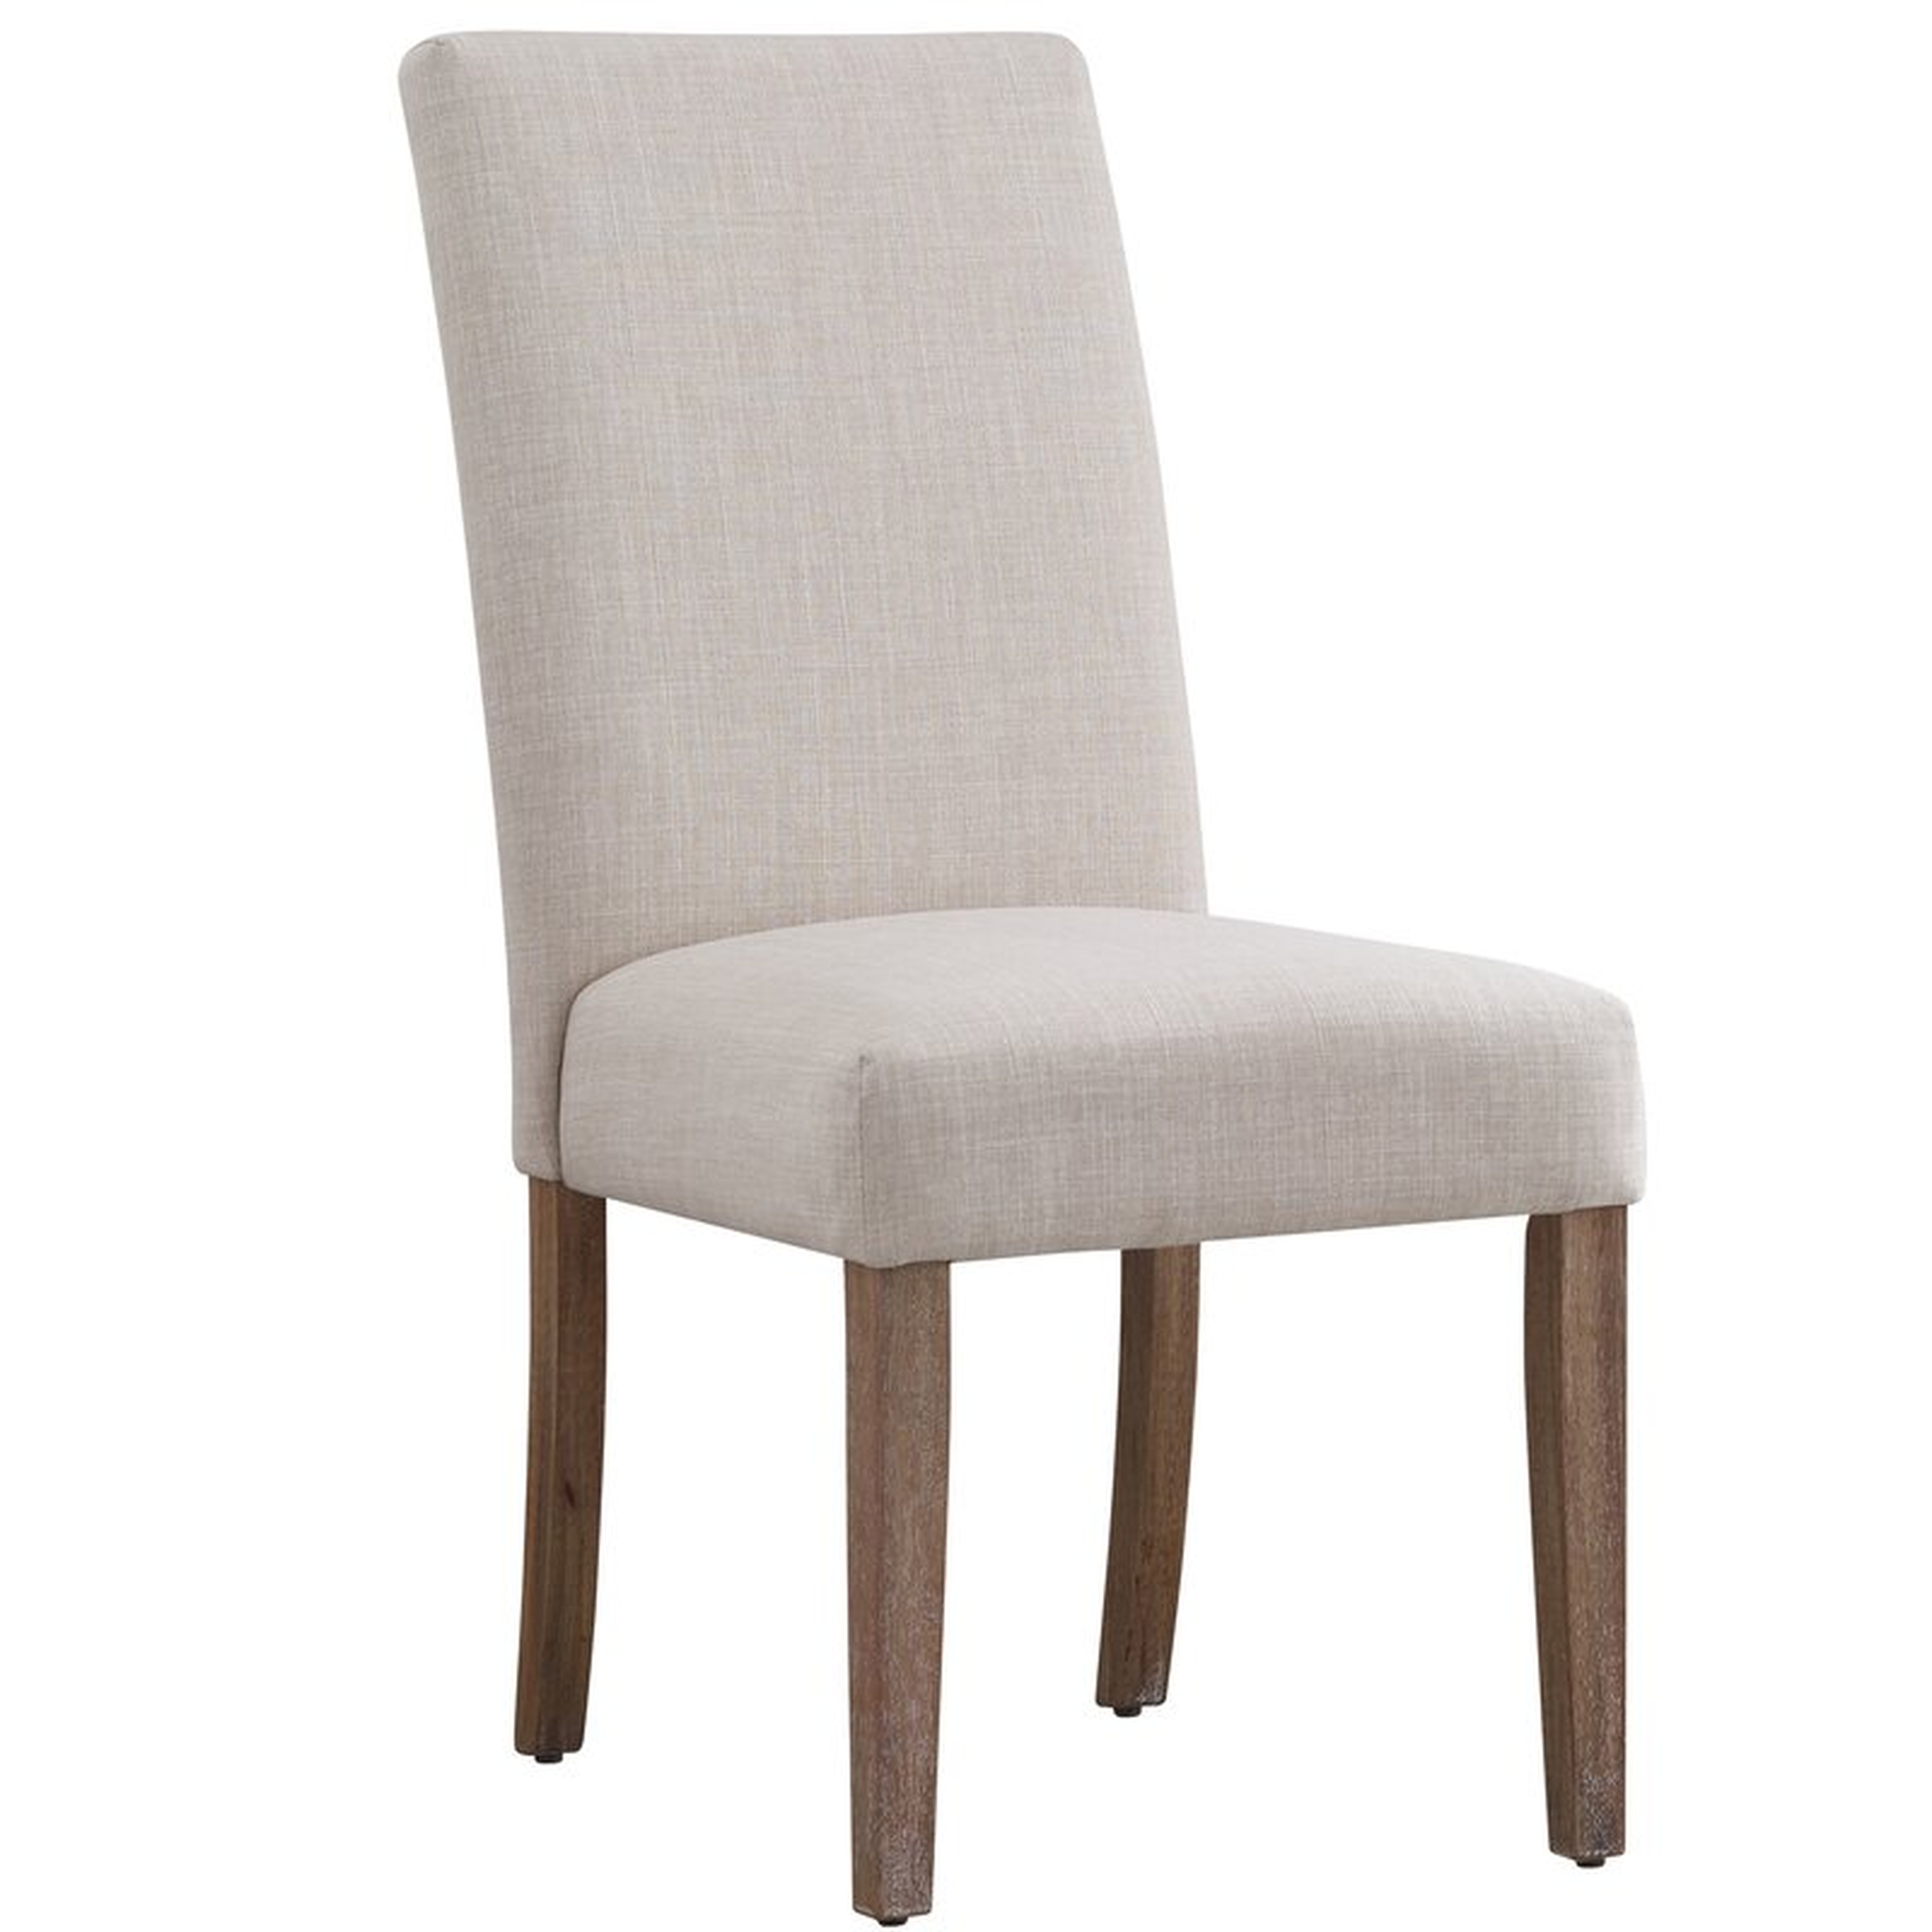 Abbate Linen Upholstered Parson Chair in Beige (Set of 2) - Wayfair